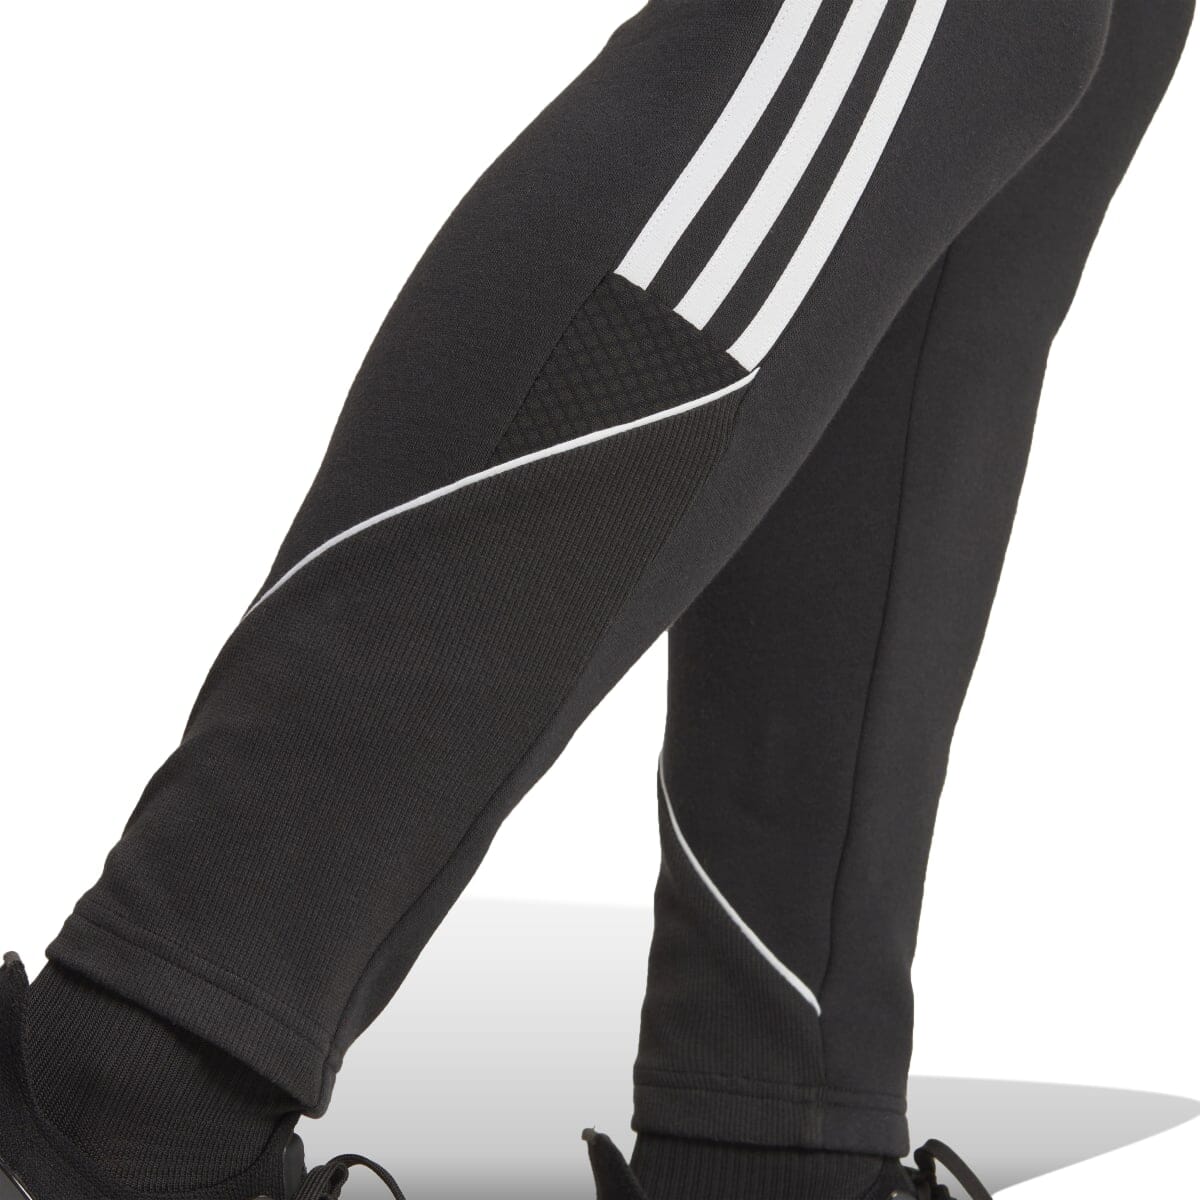 adidas Tiro 23 League Training Pants - Black